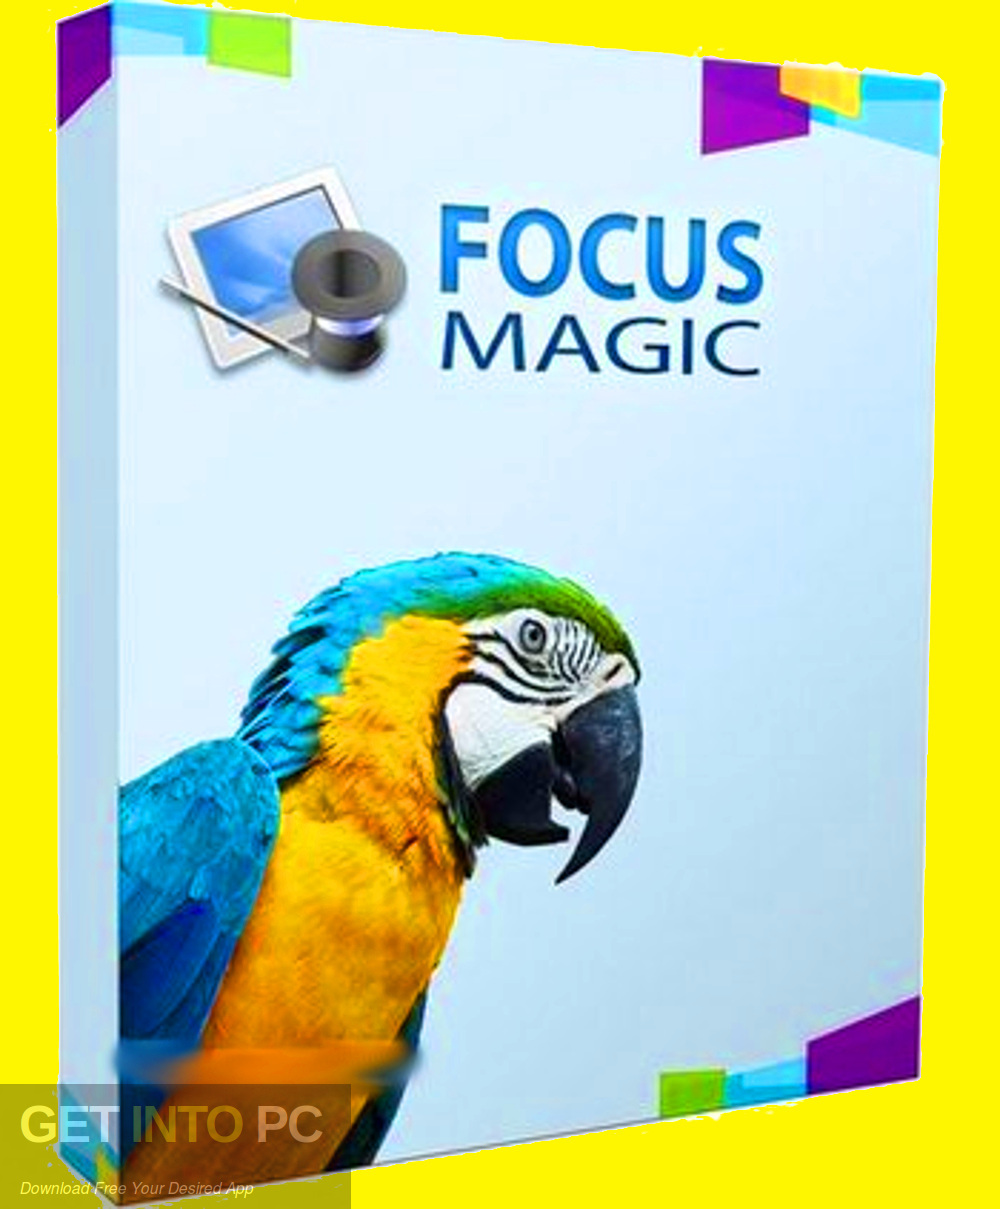 Focus Magic Free Download GetintoPC.com